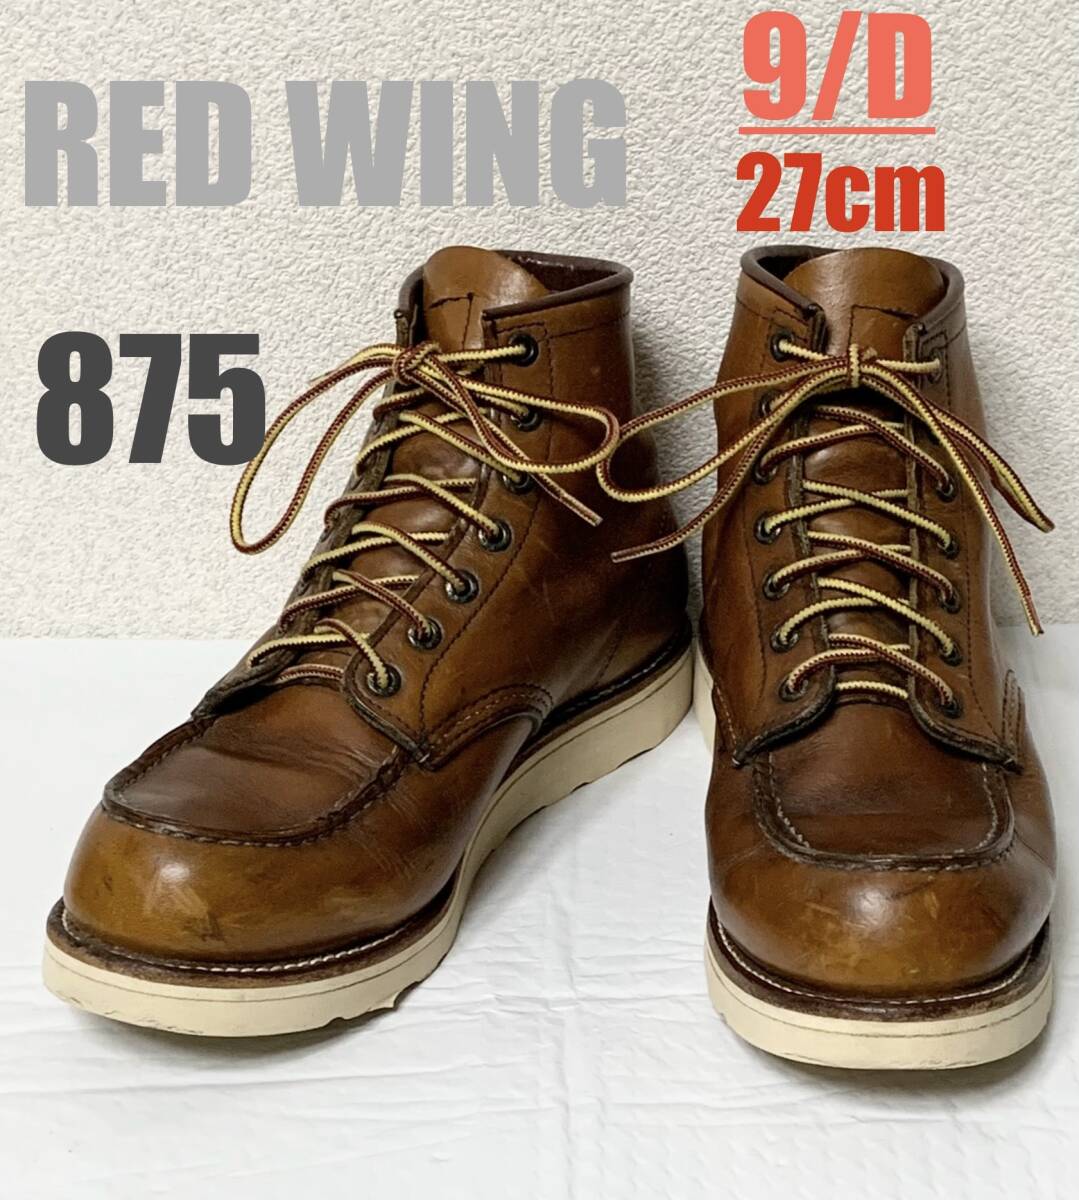 【9/D】875 RED WING 27cm◇レッドウィング　ハーレー　gpz 900 ブーツ